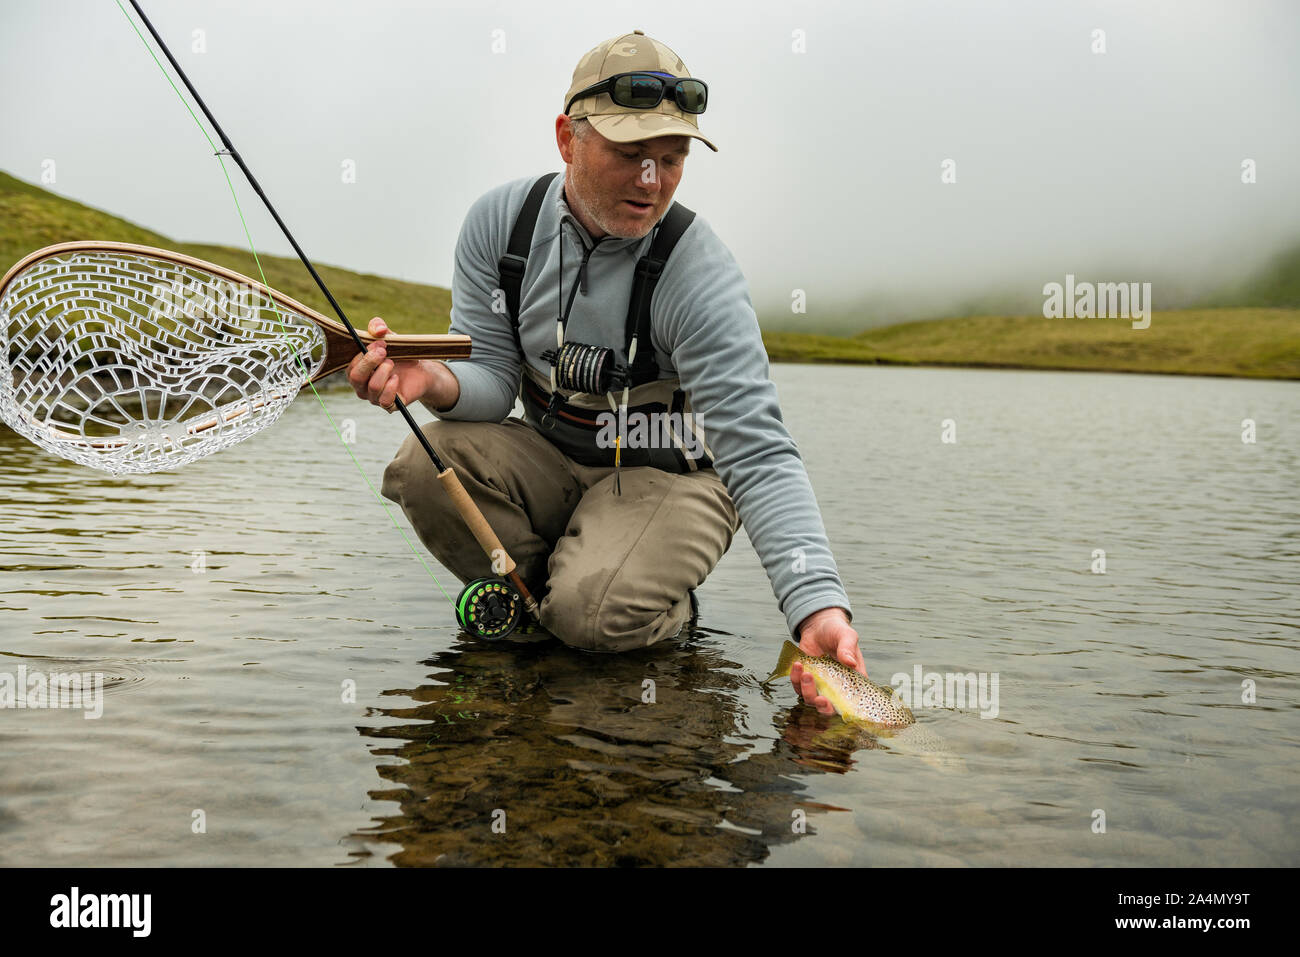 Fisherman with caught fish Stock Photo